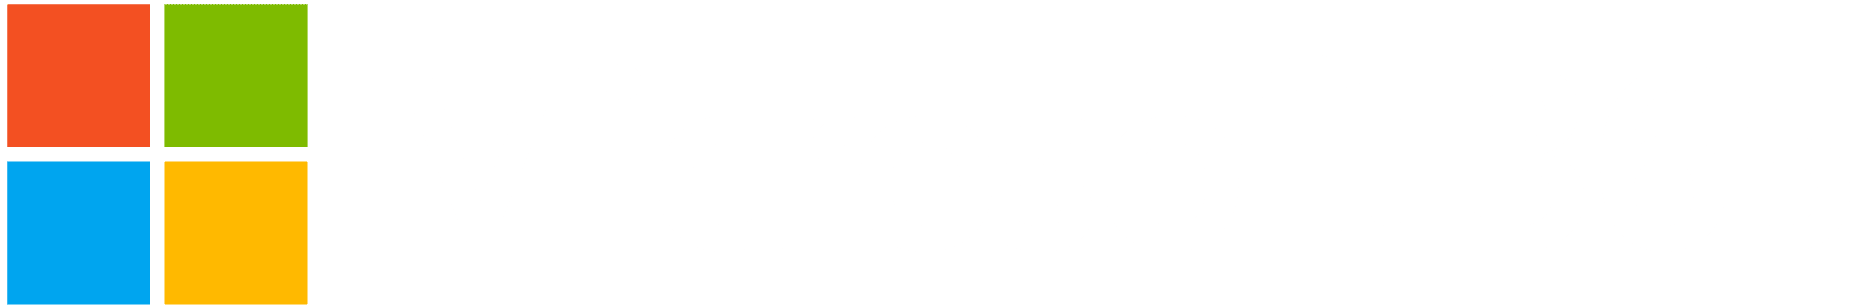 Microsoft 365 logo copy